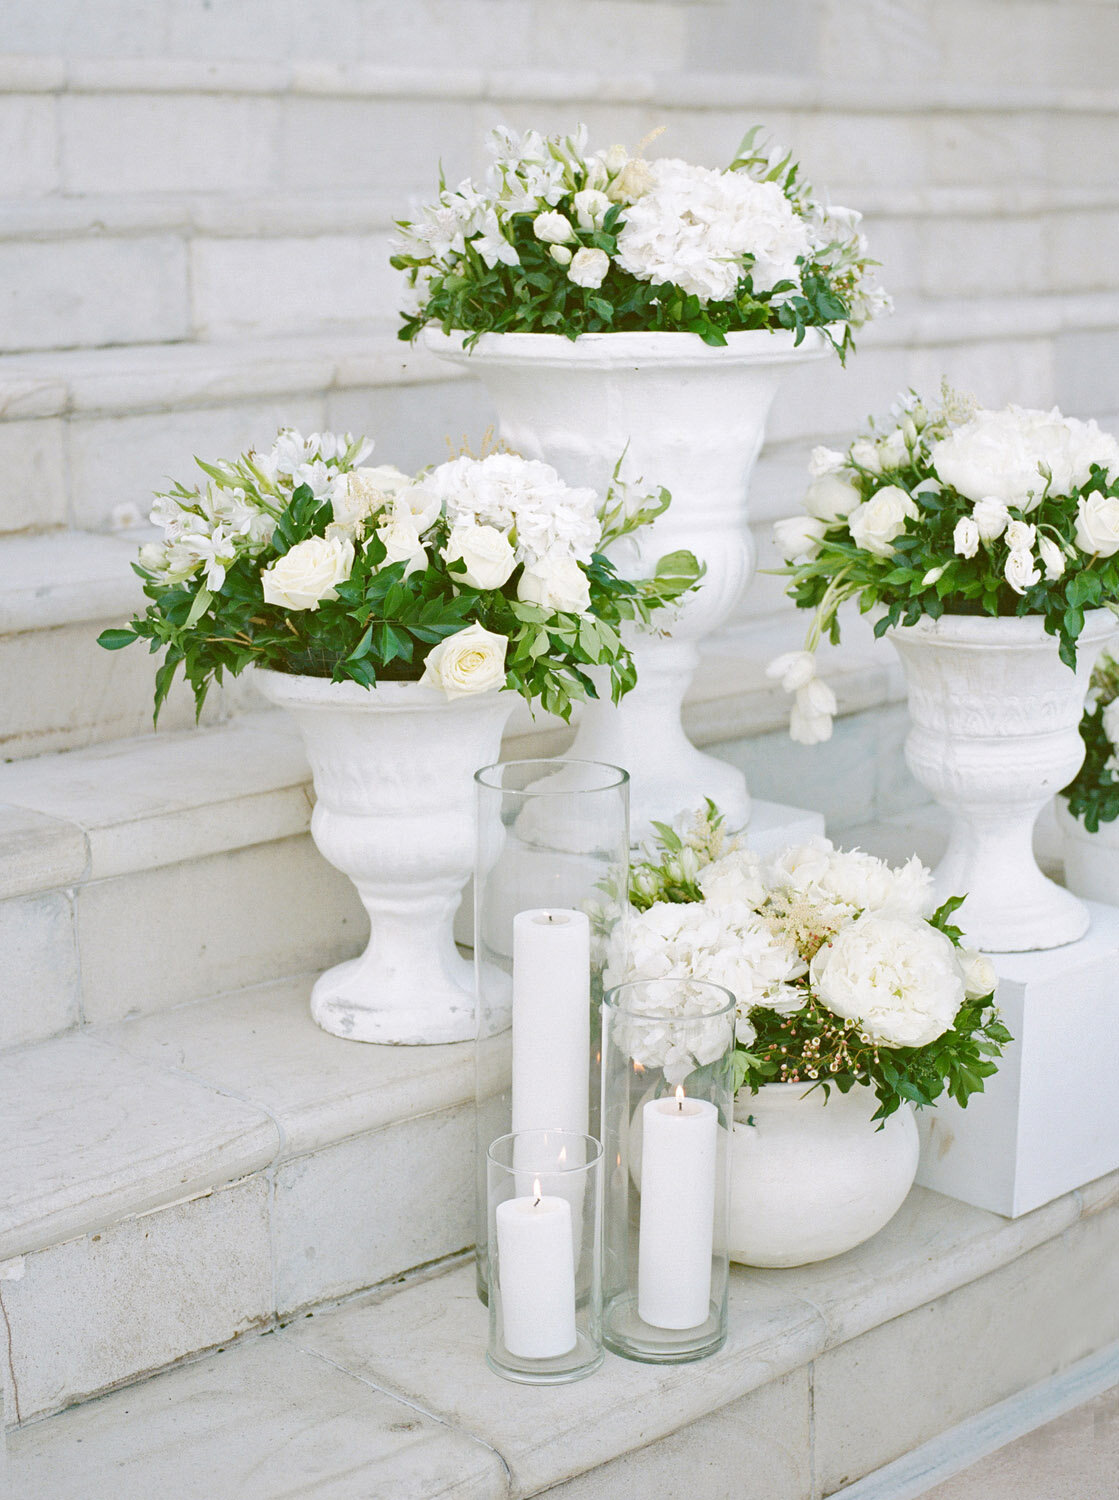 destination-wedding-bali-amankila-different-heigh-shapes-white-urns-floral-arrangements-candles-ceremony